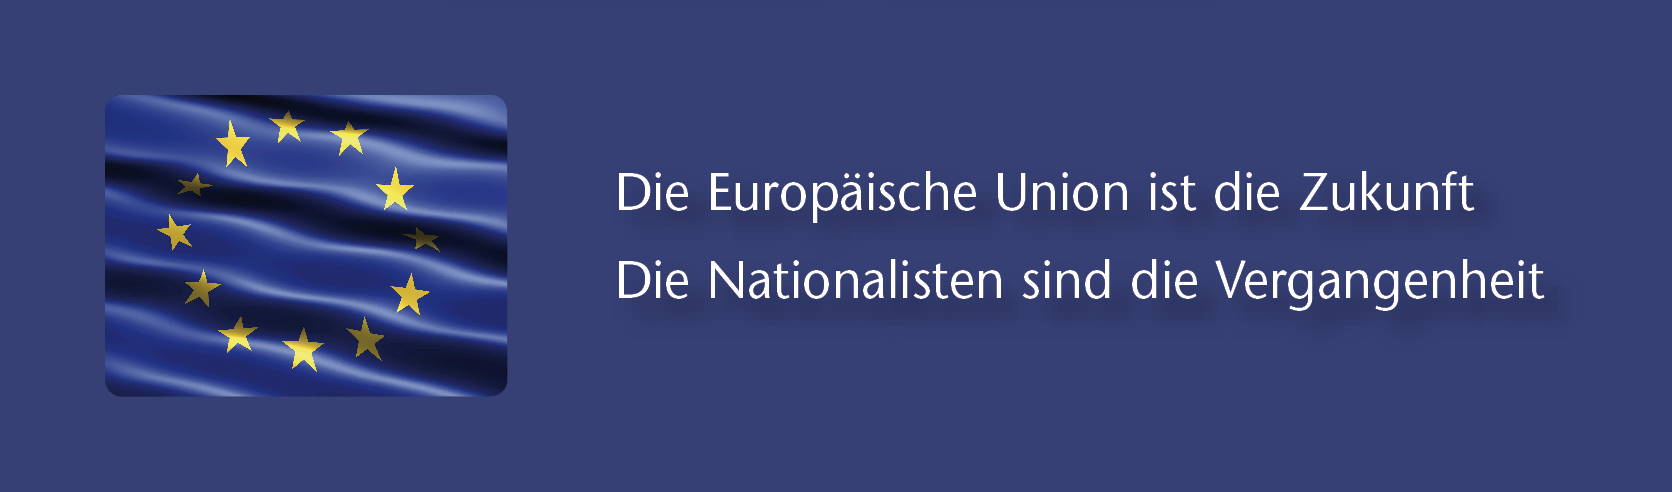 Europian_Union_is_the_Future.jpg